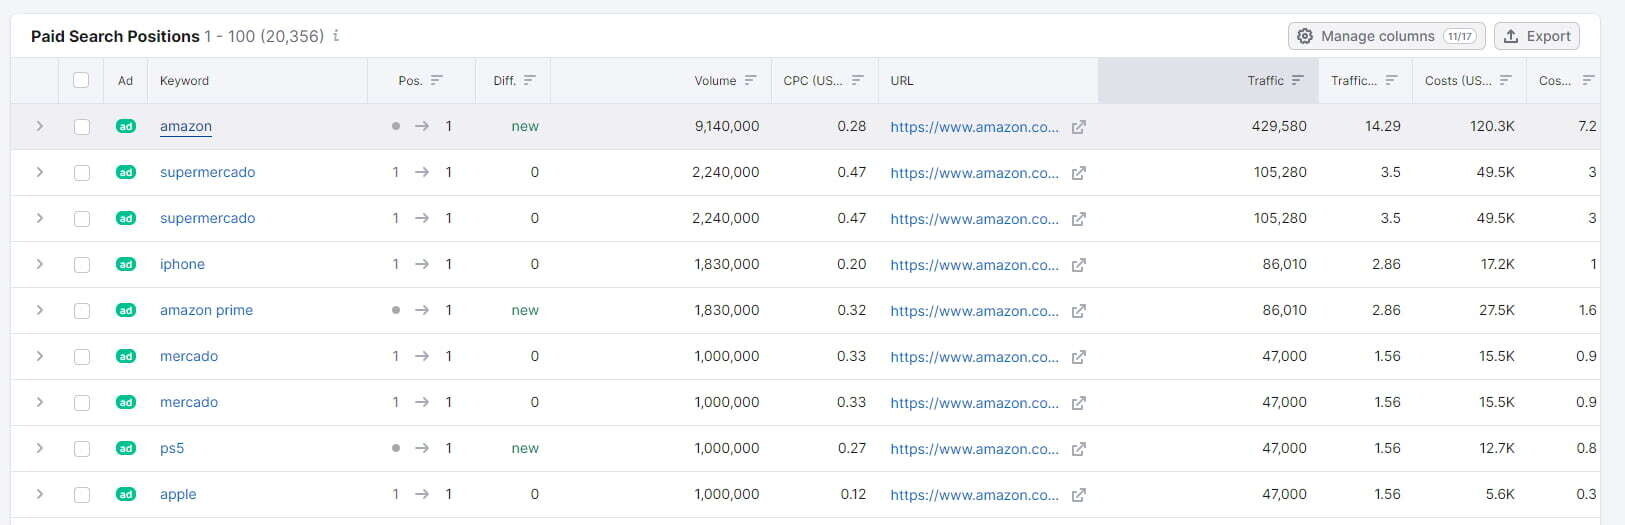 screenshot da análise de paid search positions do semrush